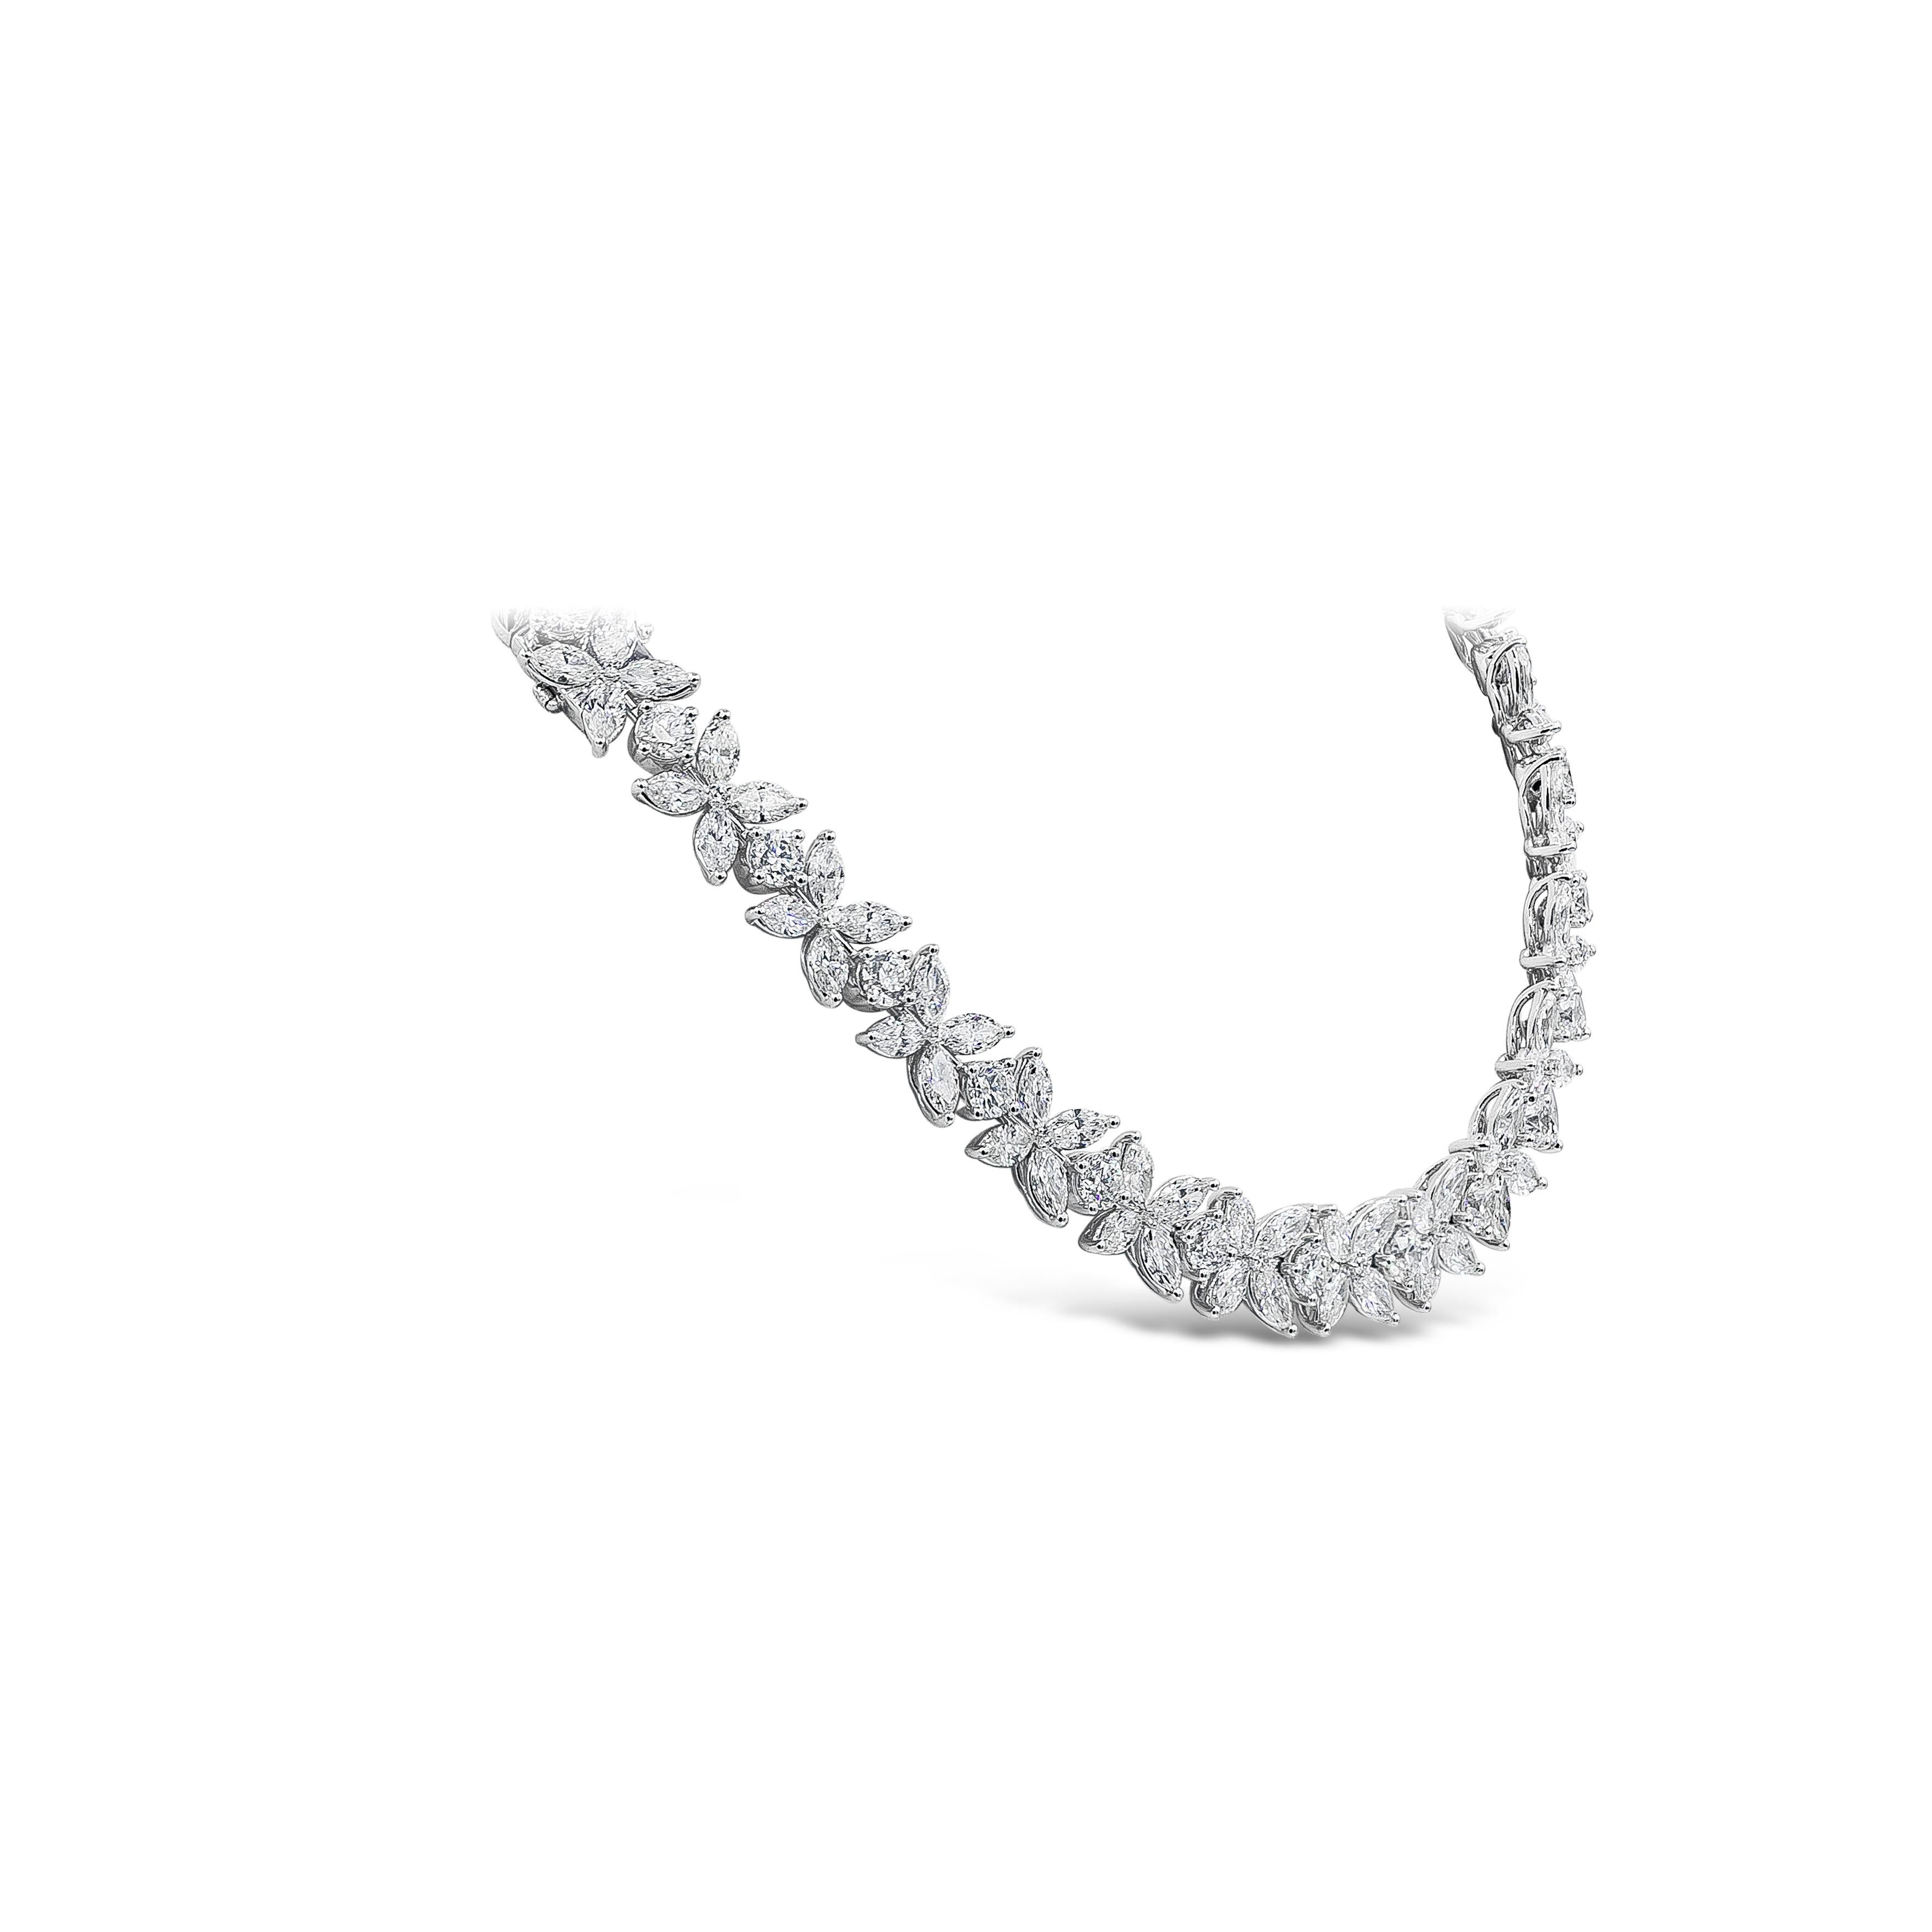 Contemporary Roman Malakov 16.92 Carats Total Diamond Floral Motif Bracelet Necklace For Sale